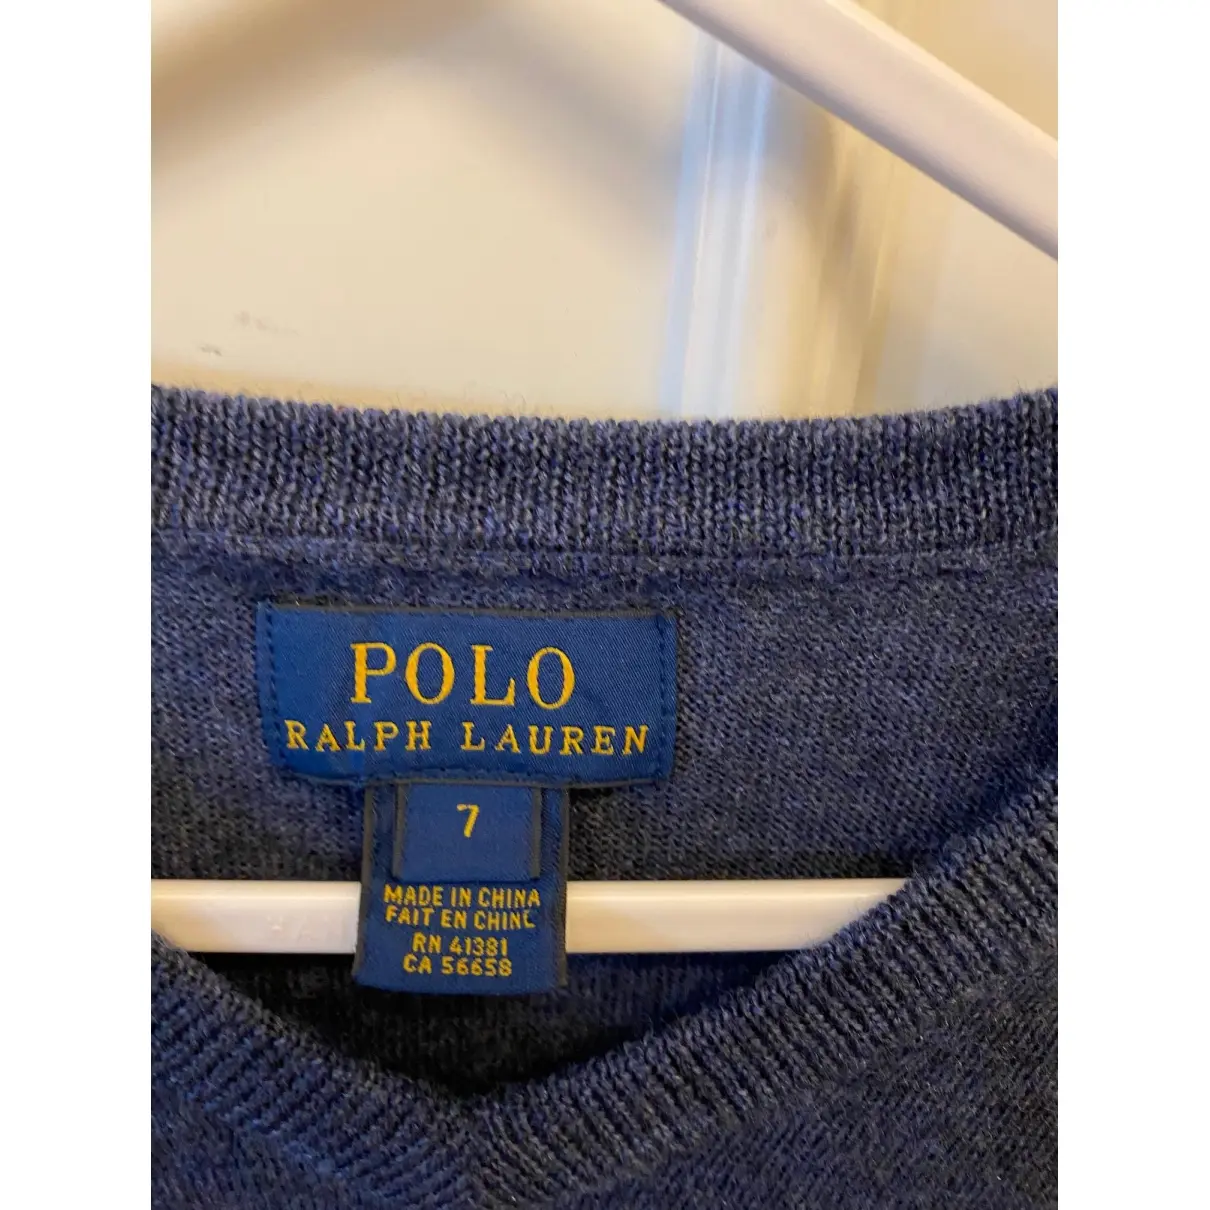 Polo Ralph Lauren Wool sweater for sale